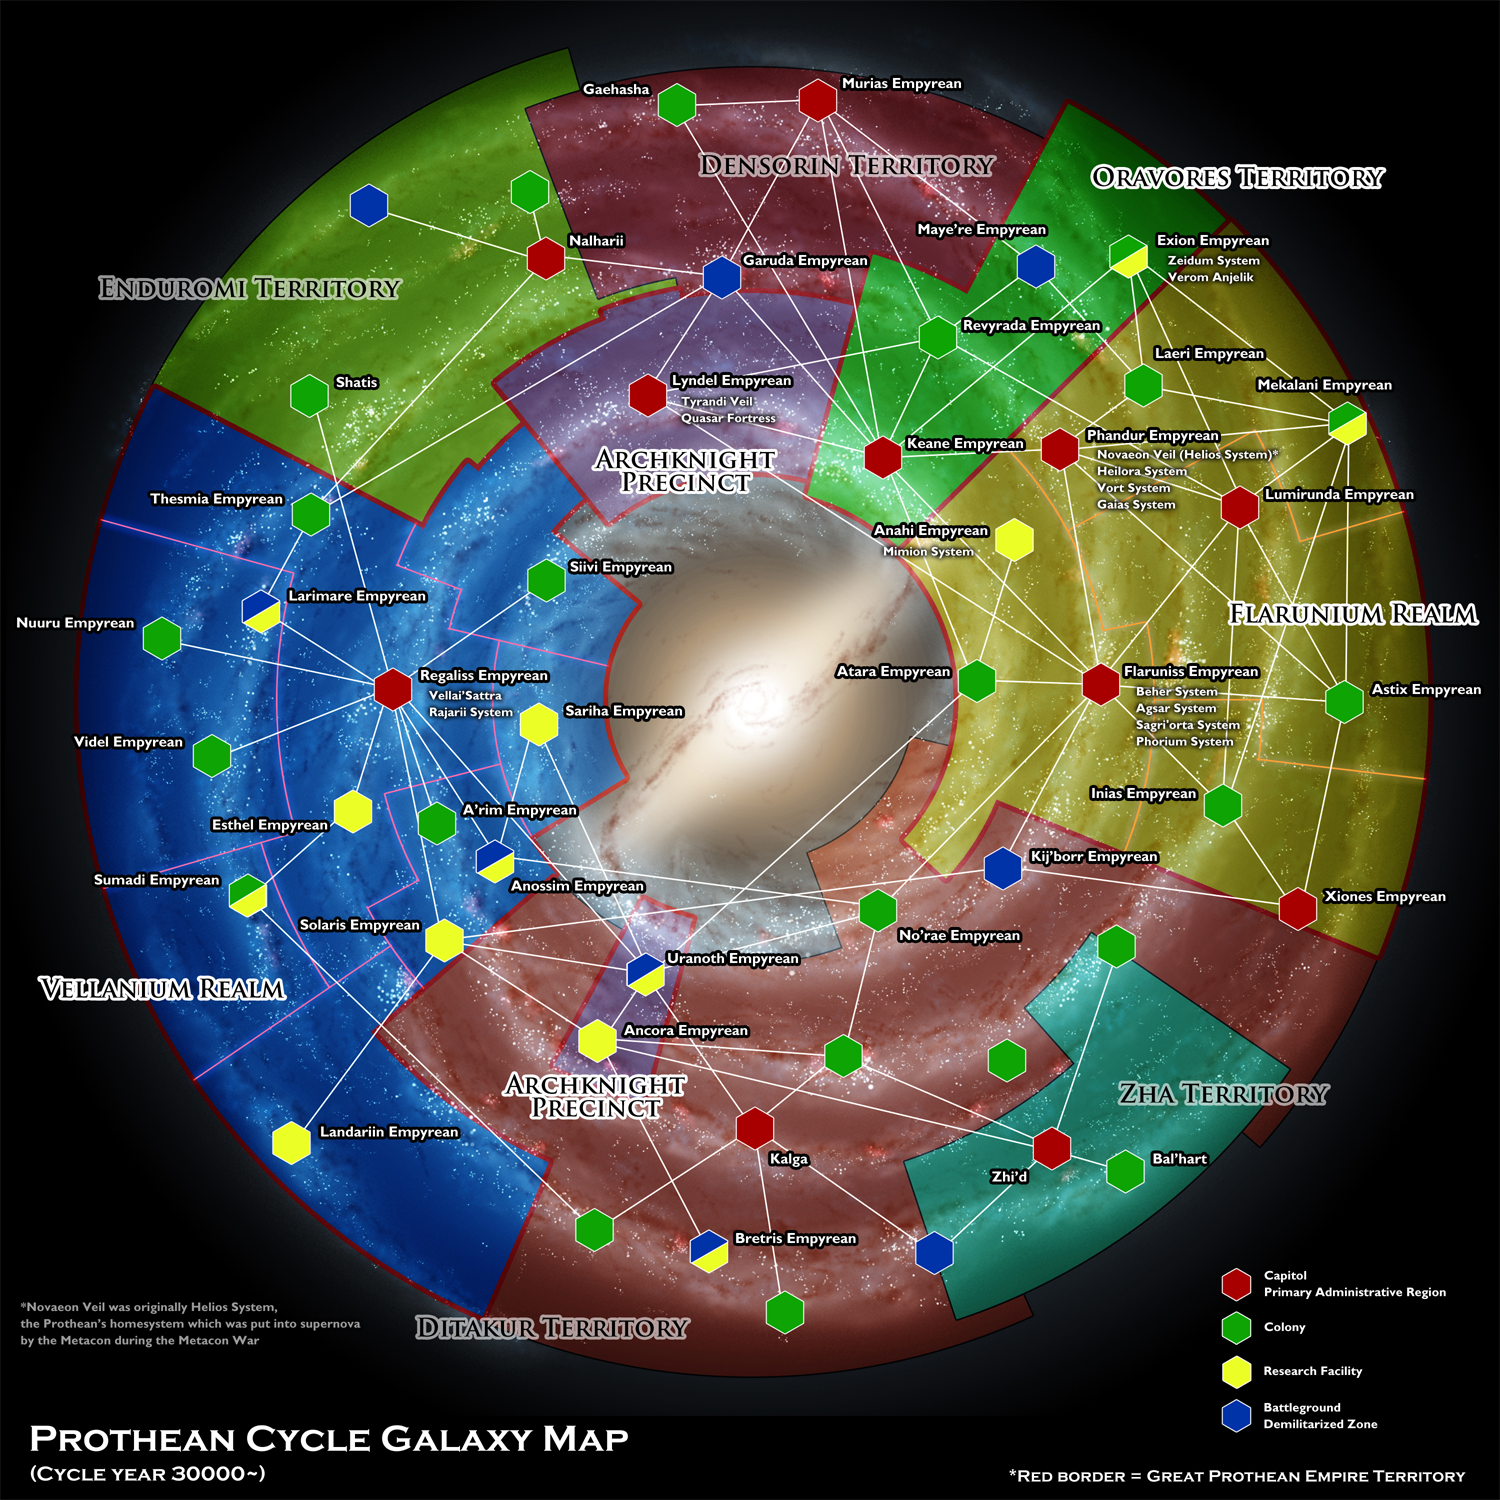 Prothean Cycle Galaxy Map (ver. 0.82) by StellarStateLogic on DeviantArt